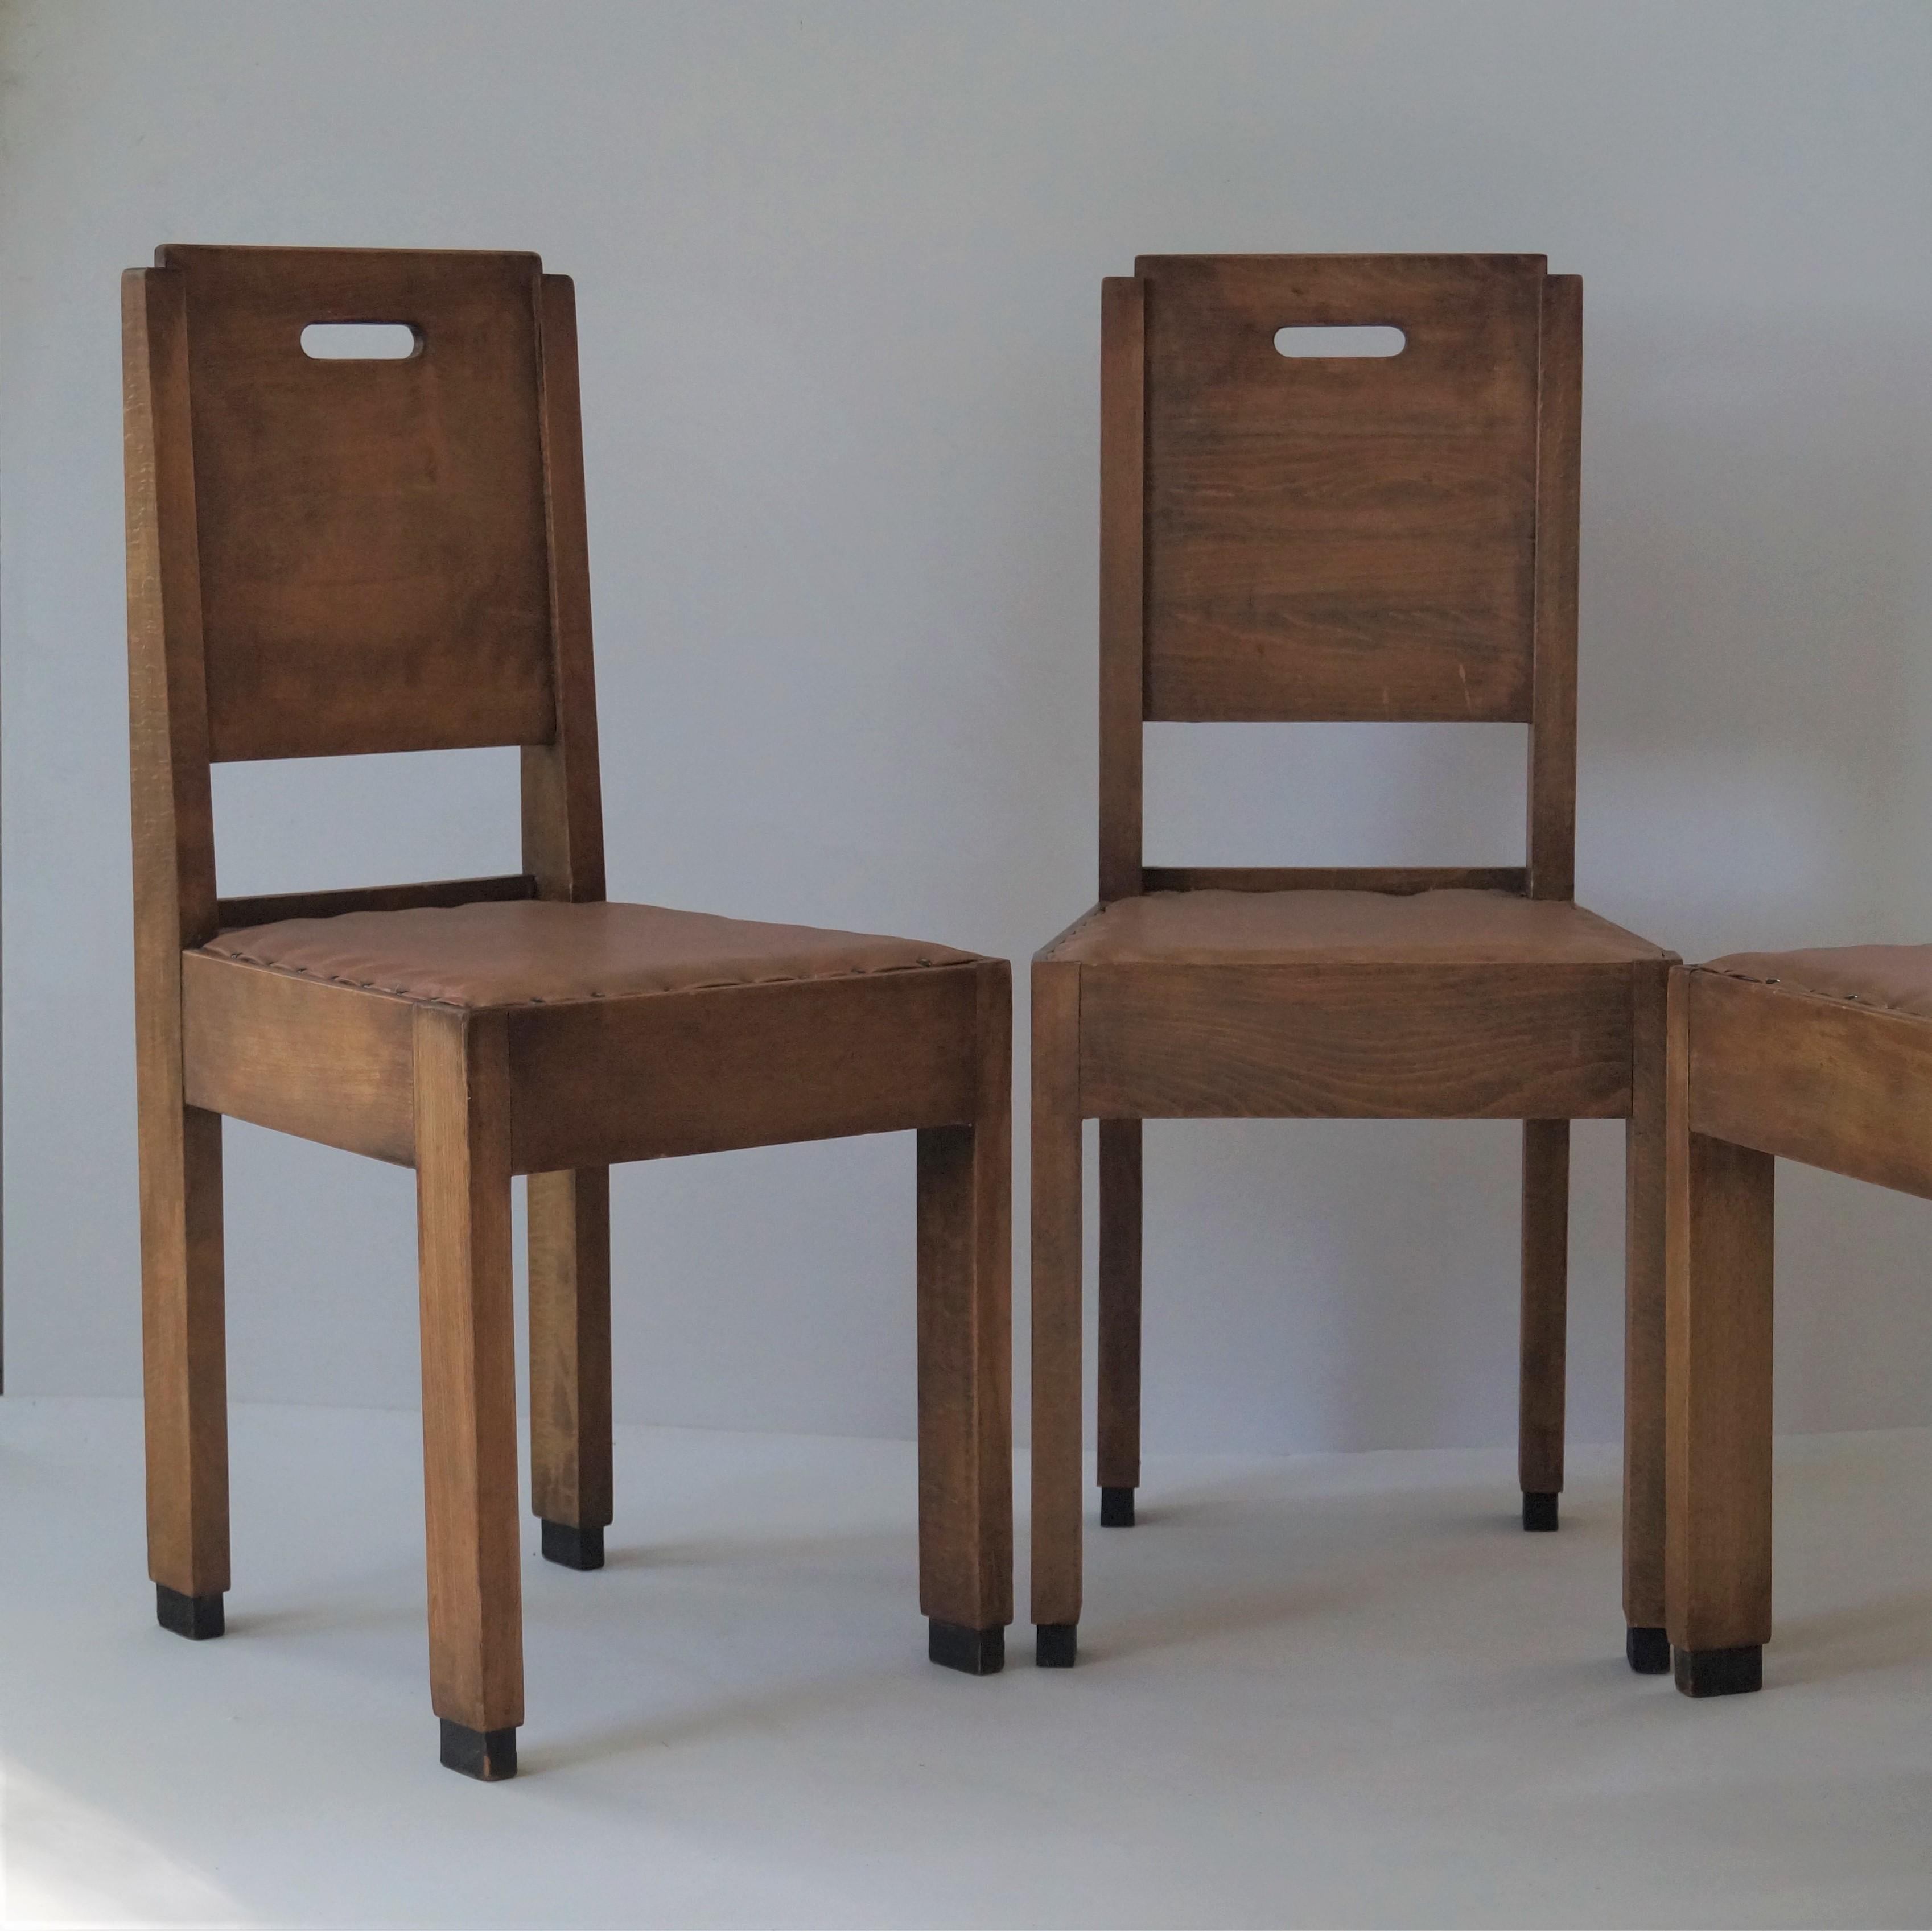 Dutch Art Deco De Stijl/Haagse School set of chairs, 1920s For Sale 6